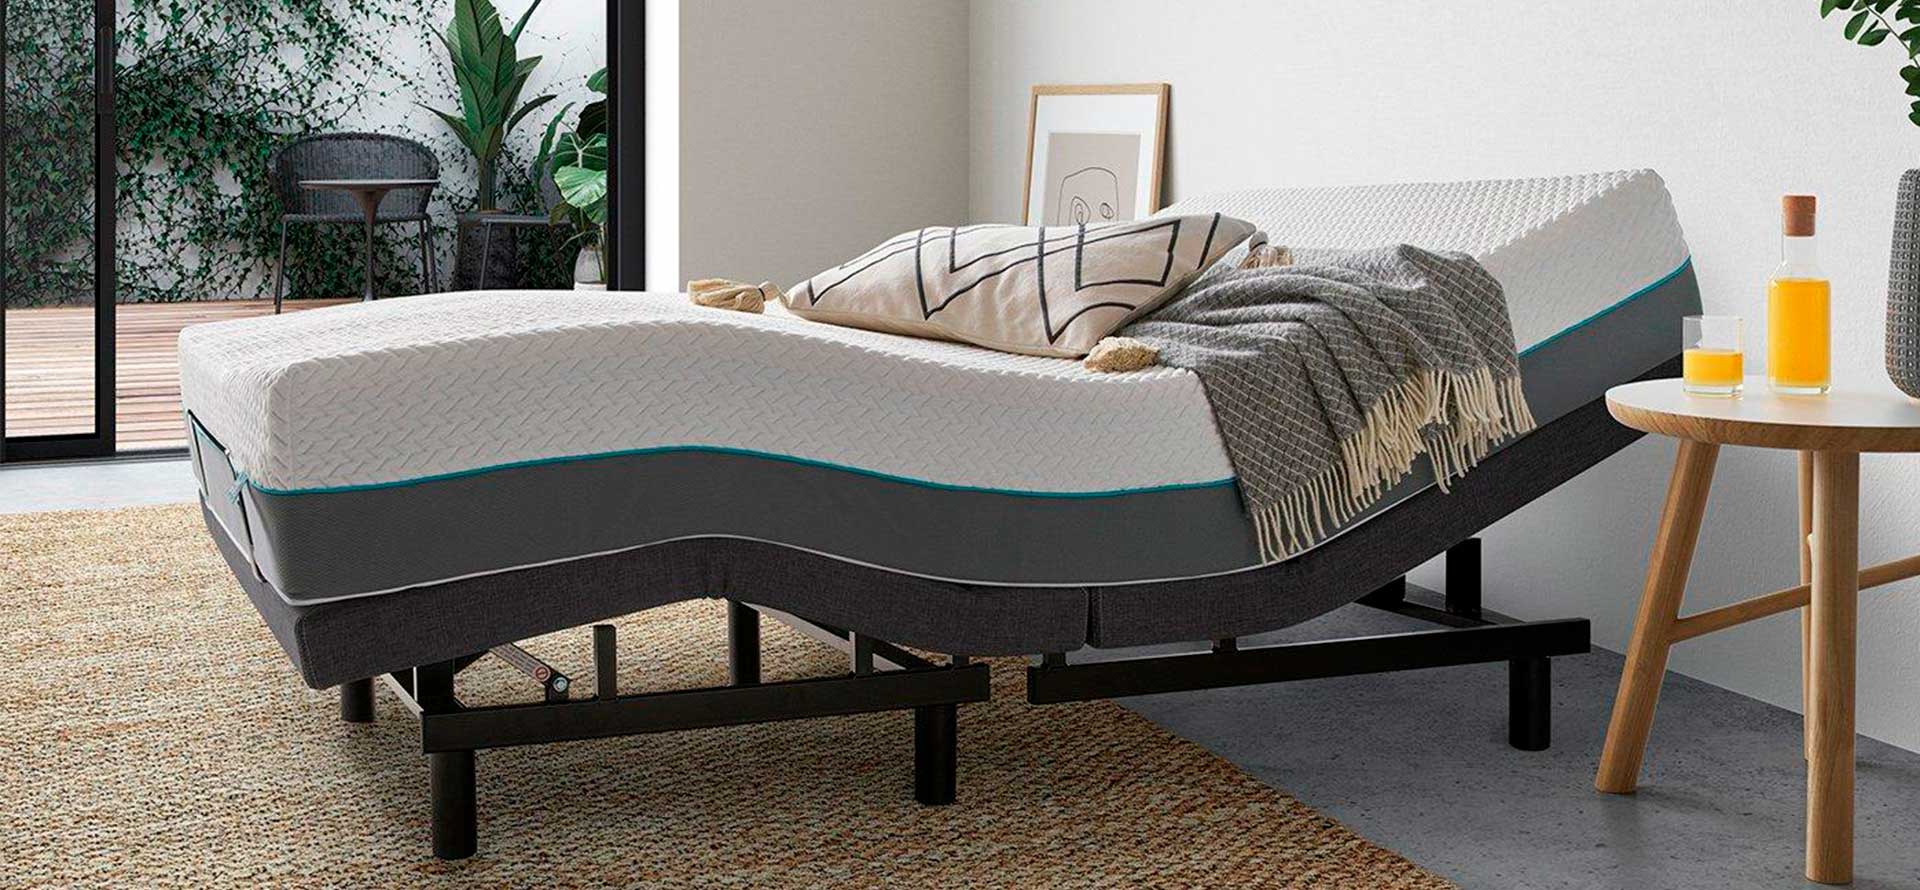 Adjustable mattress in the room.